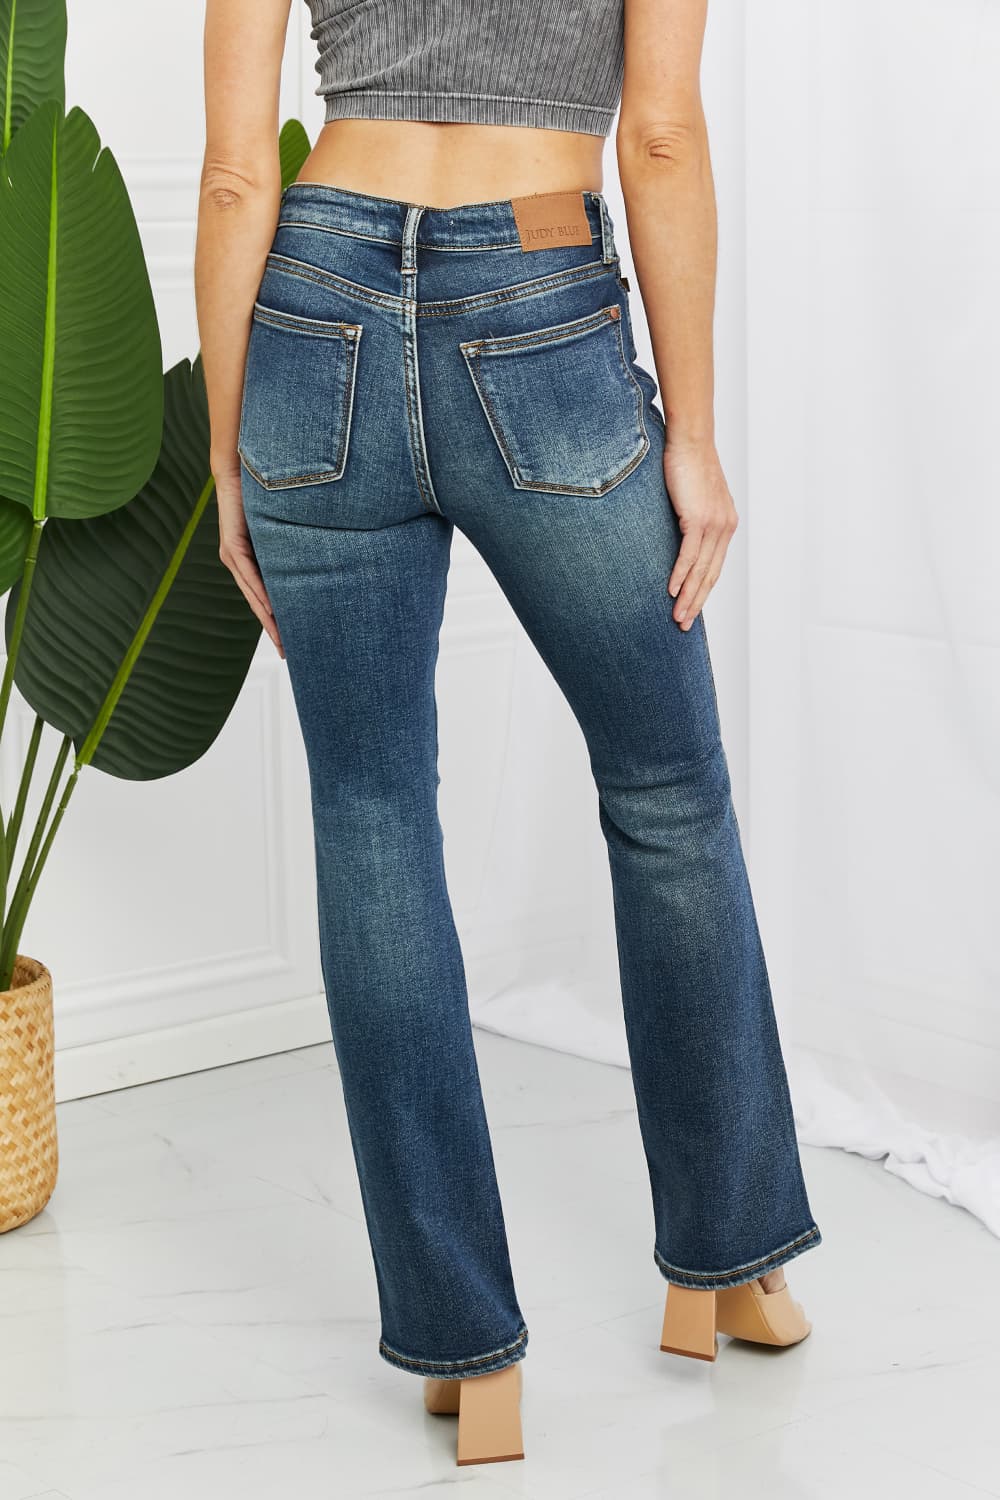 Judy Bootcut Jeans ~ Size 20W